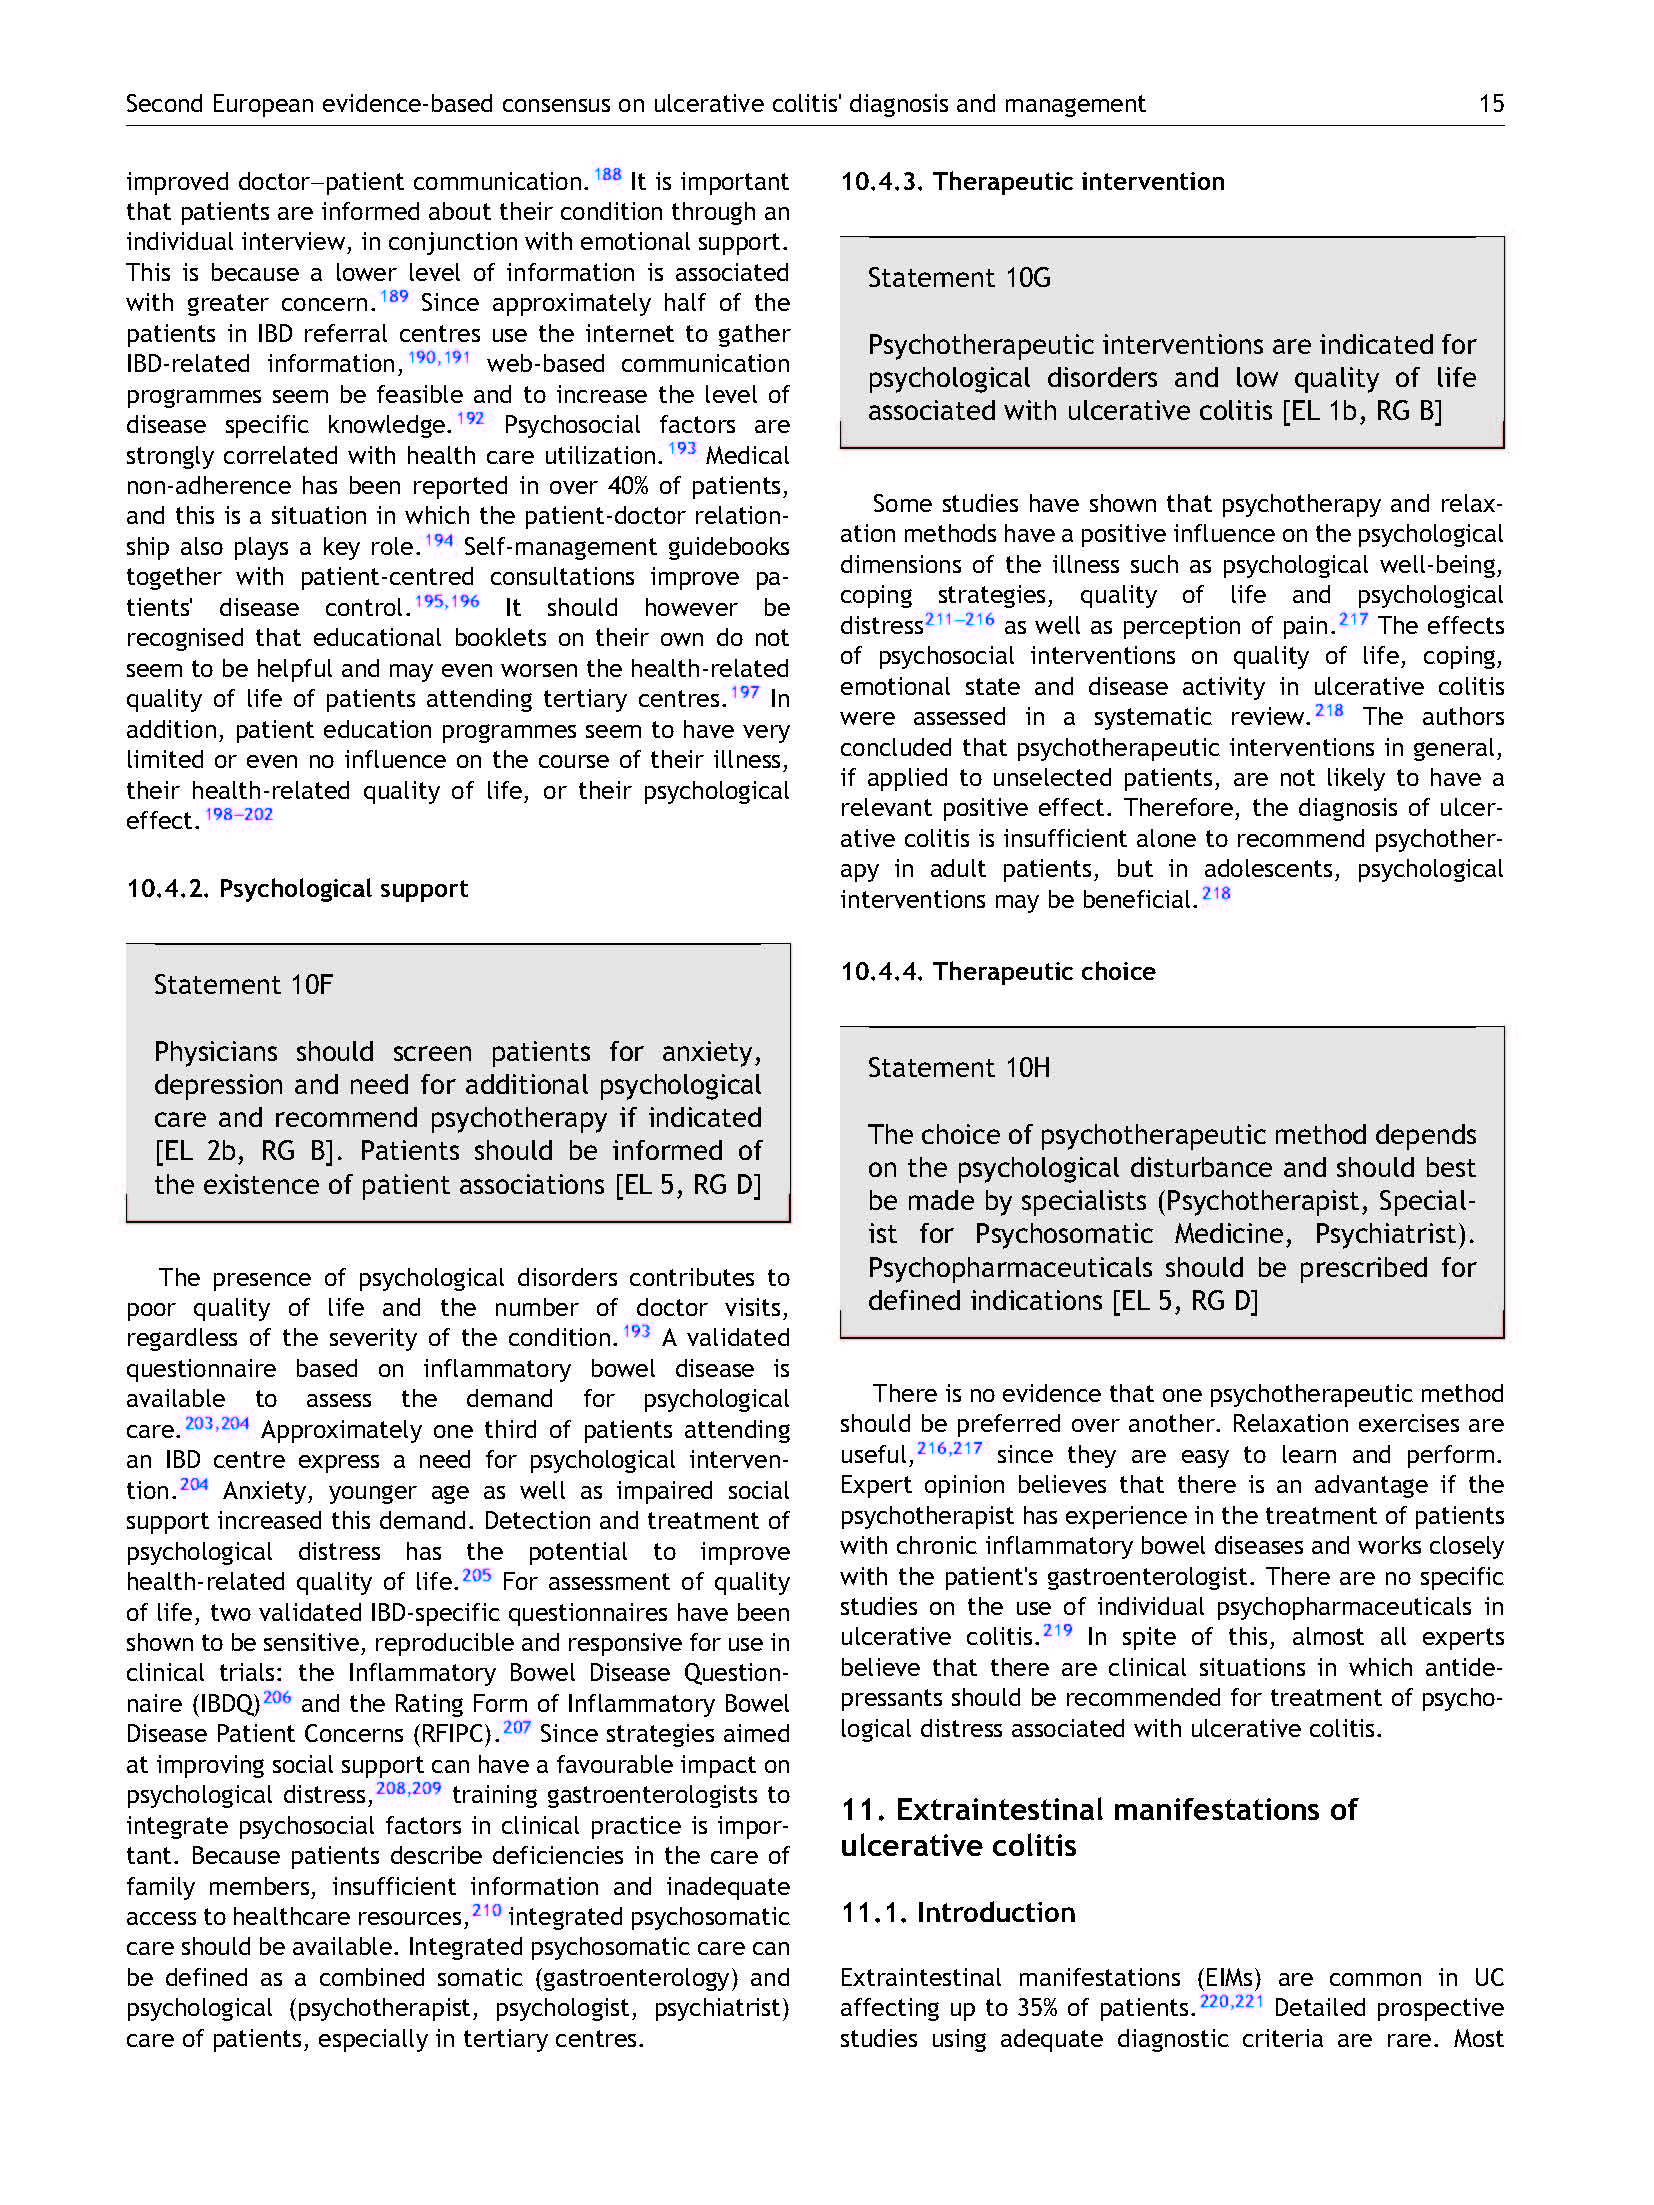 2012-ECCO第二版-欧洲询证共识：溃疡性结肠炎的诊断和处理—特殊情况_页面_15.jpg